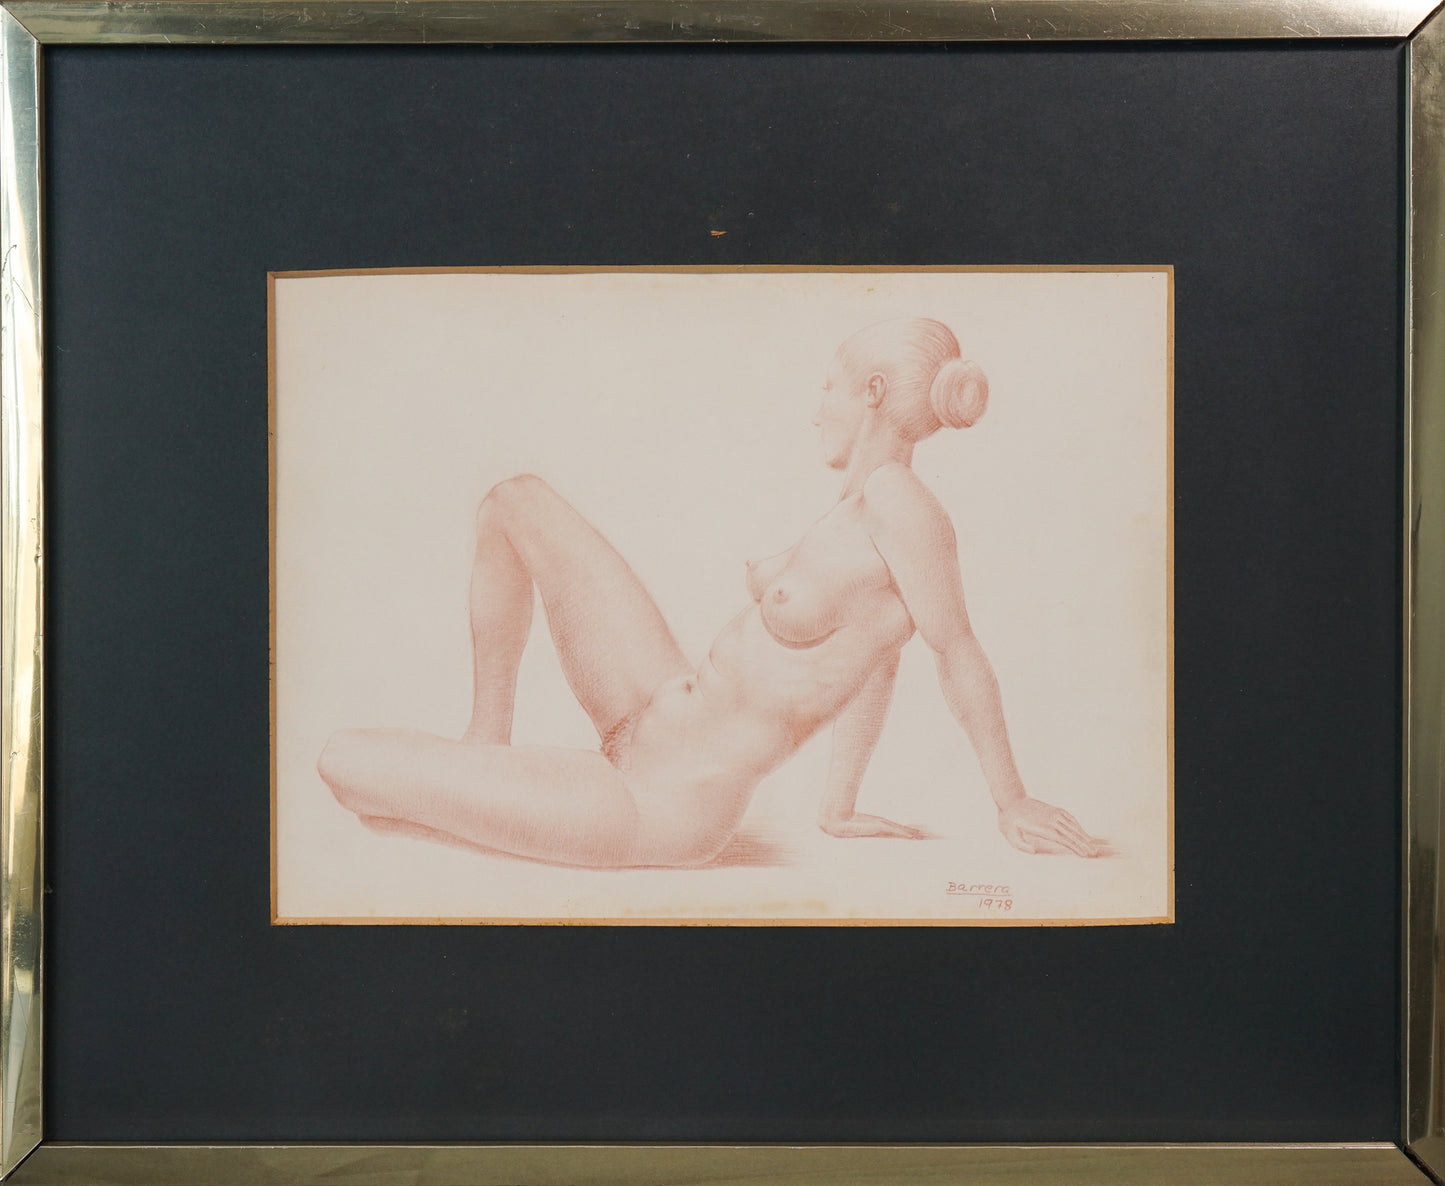 Barrera - Female Life Studies - Two Framed Drawings